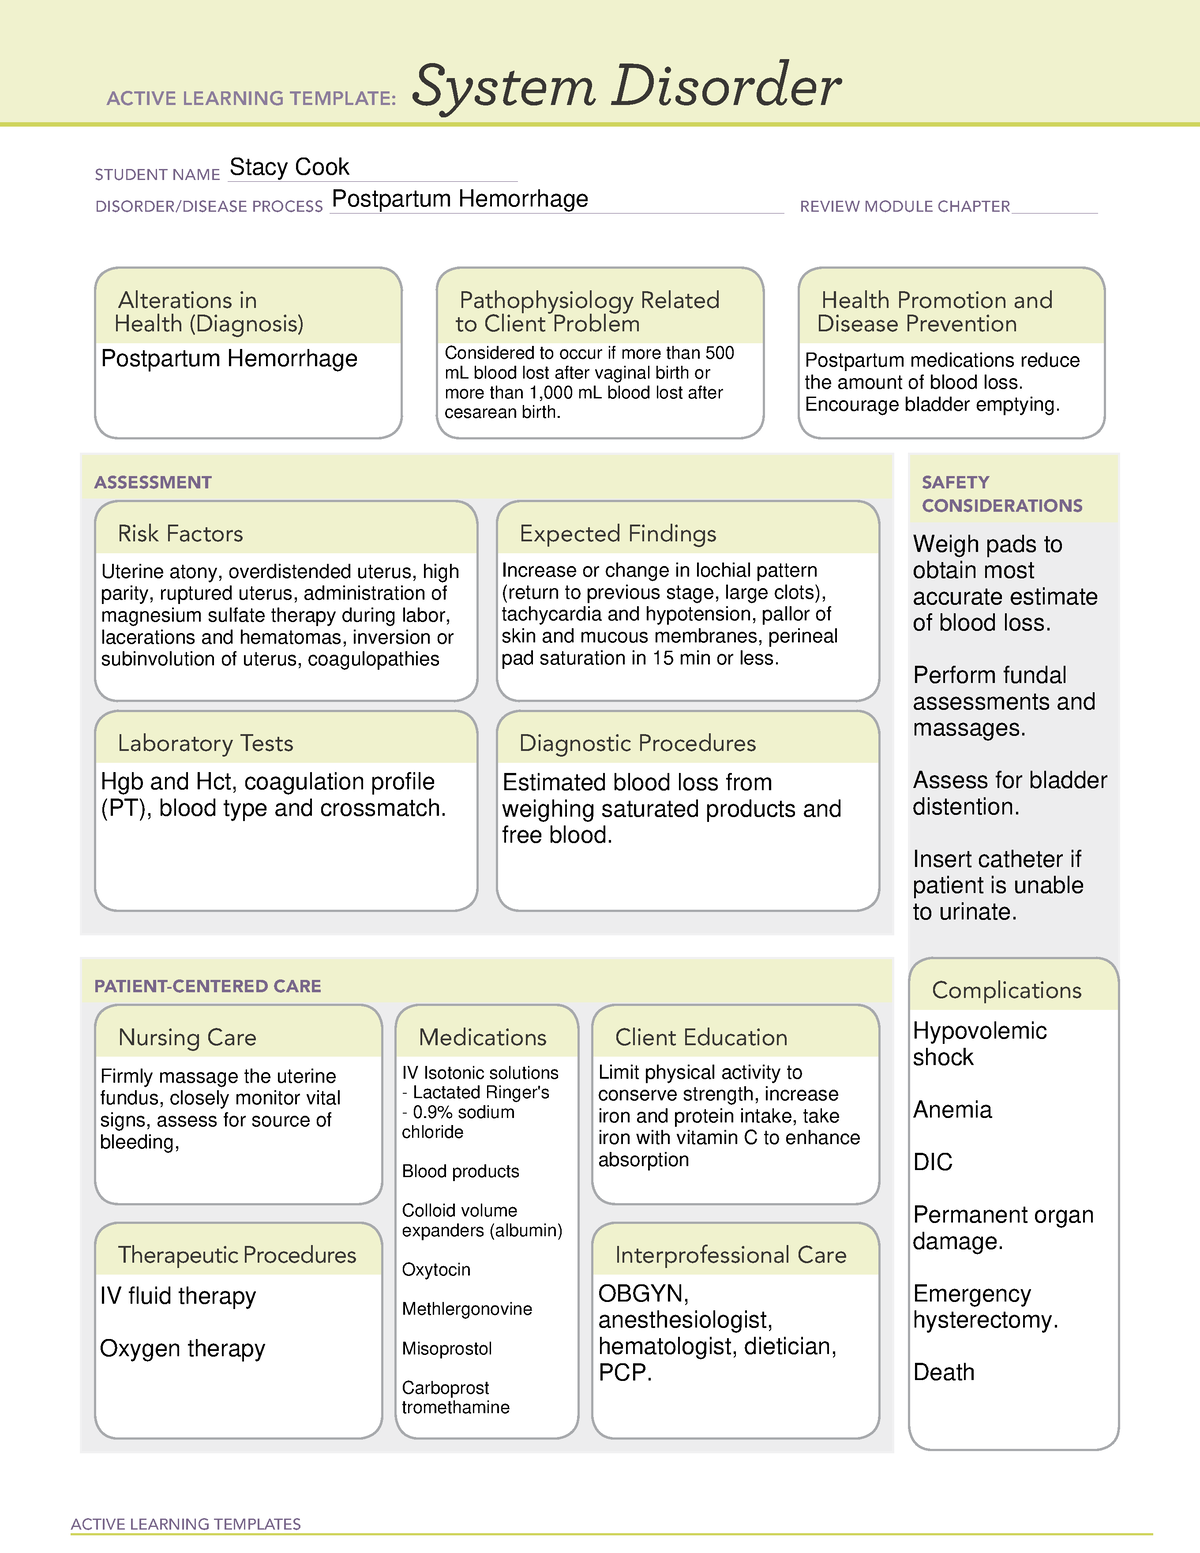 ati-system-disorder-postpartum-hemorrhage-active-learning-templates